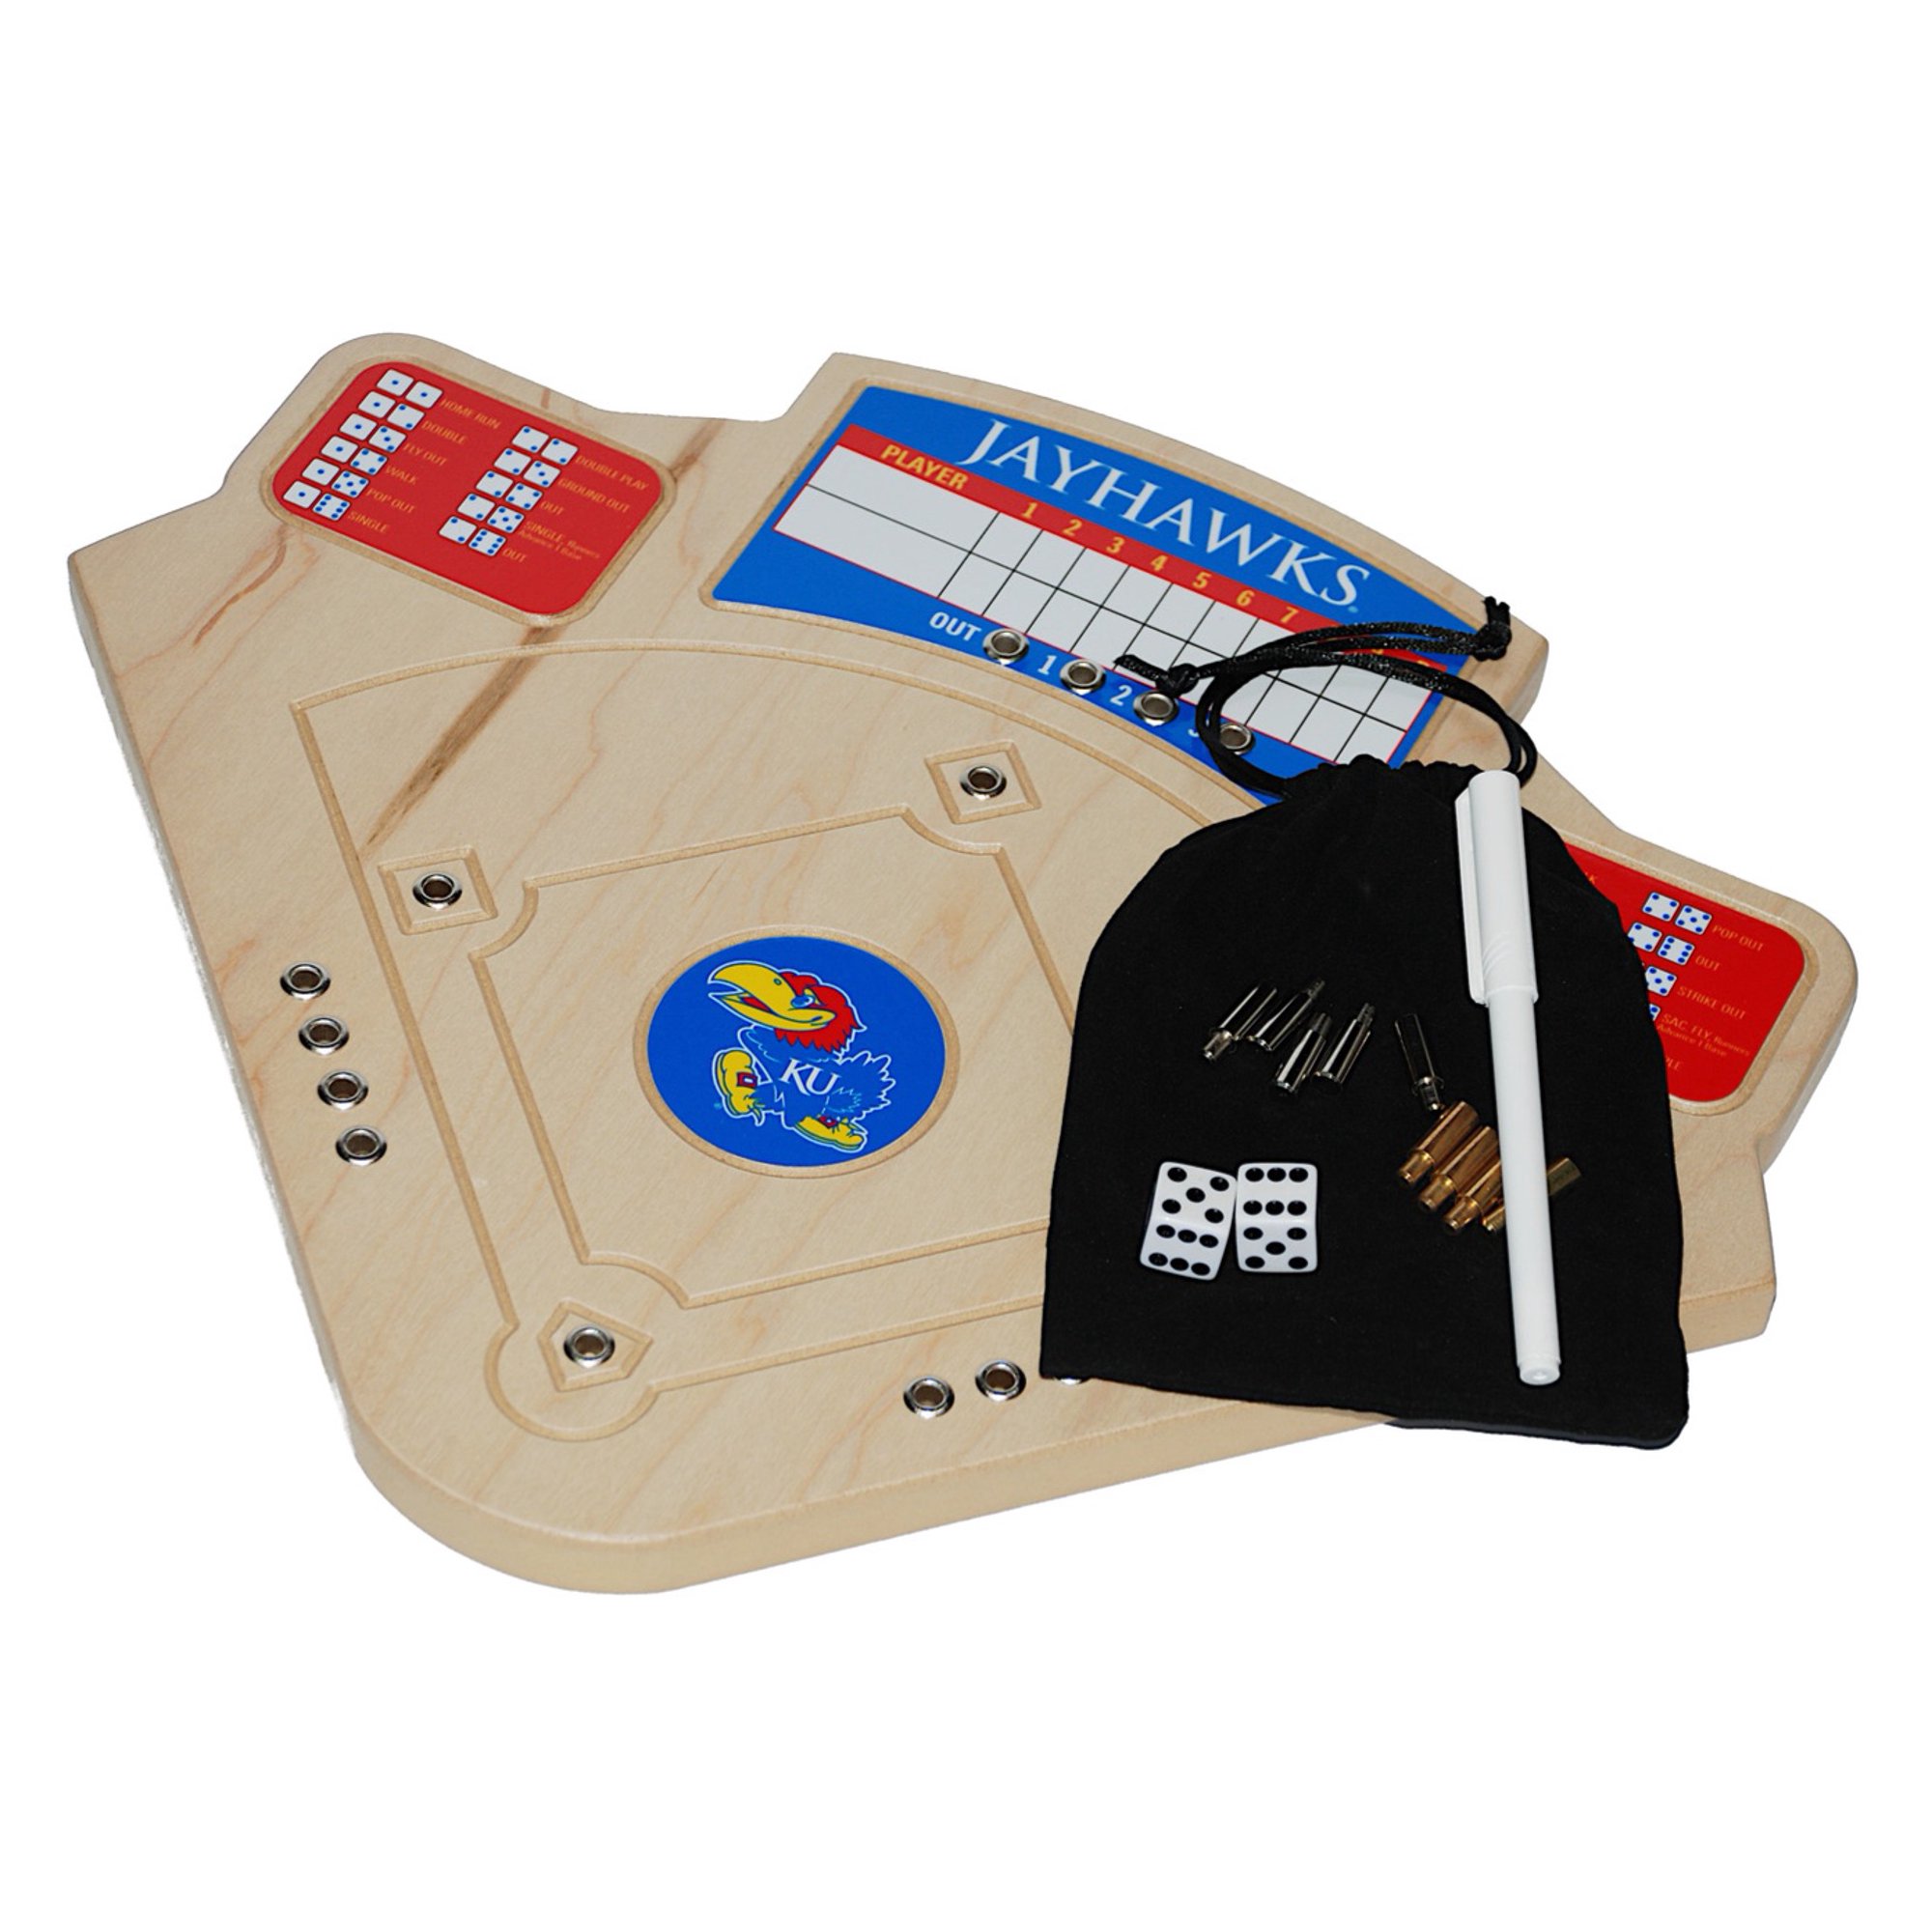 Kansas Jayhawks Handcrafted Baseball Board Game from Across the Board 